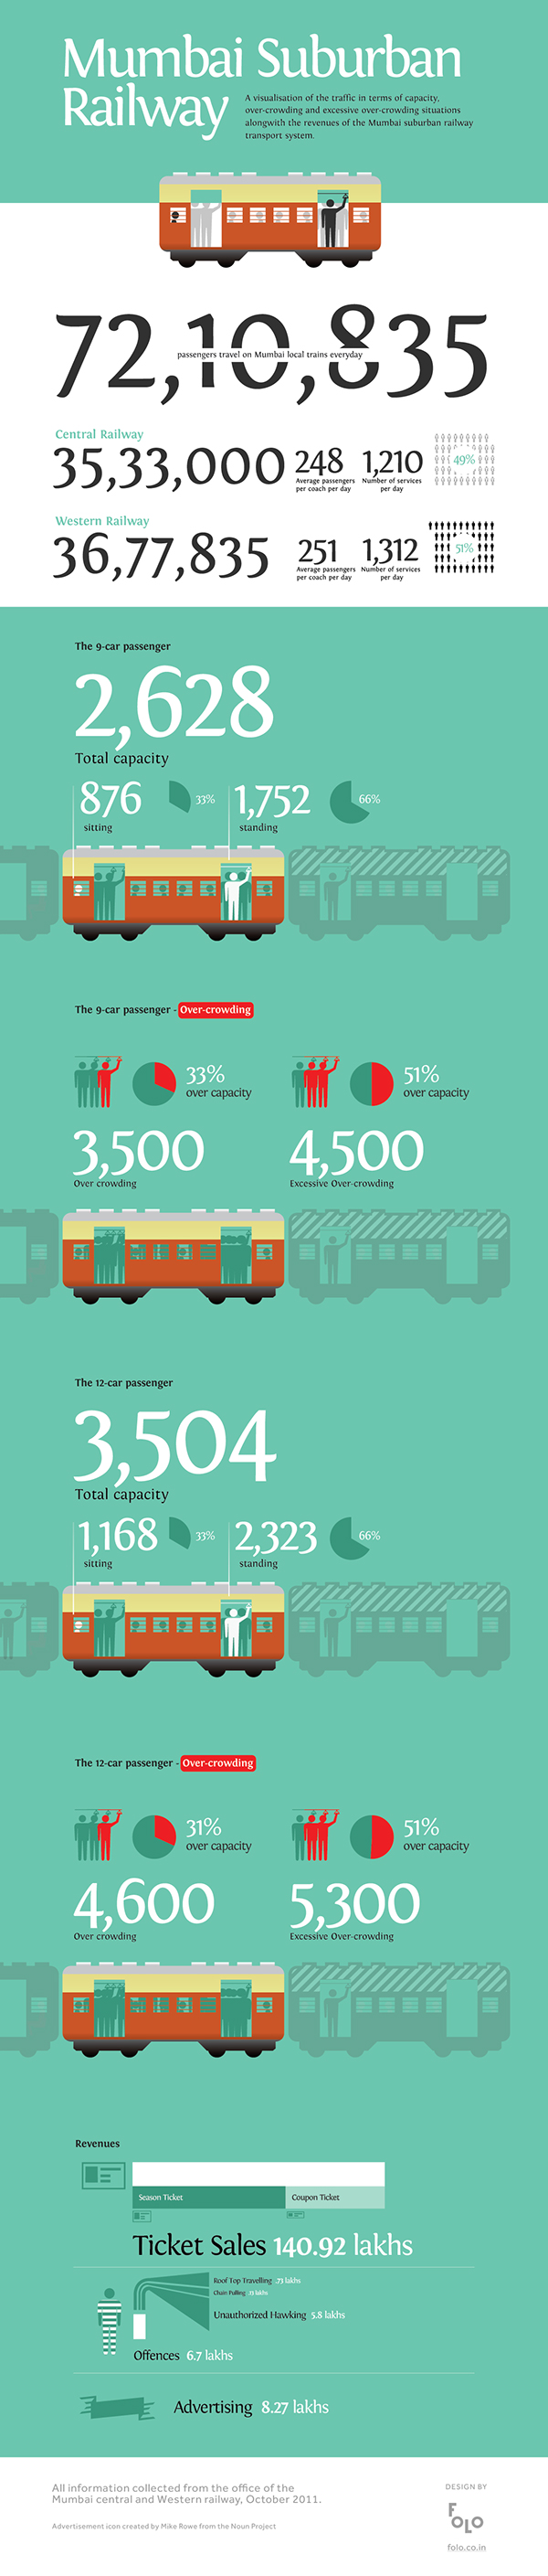 MUMBAI Suburban railway traffic revenues India